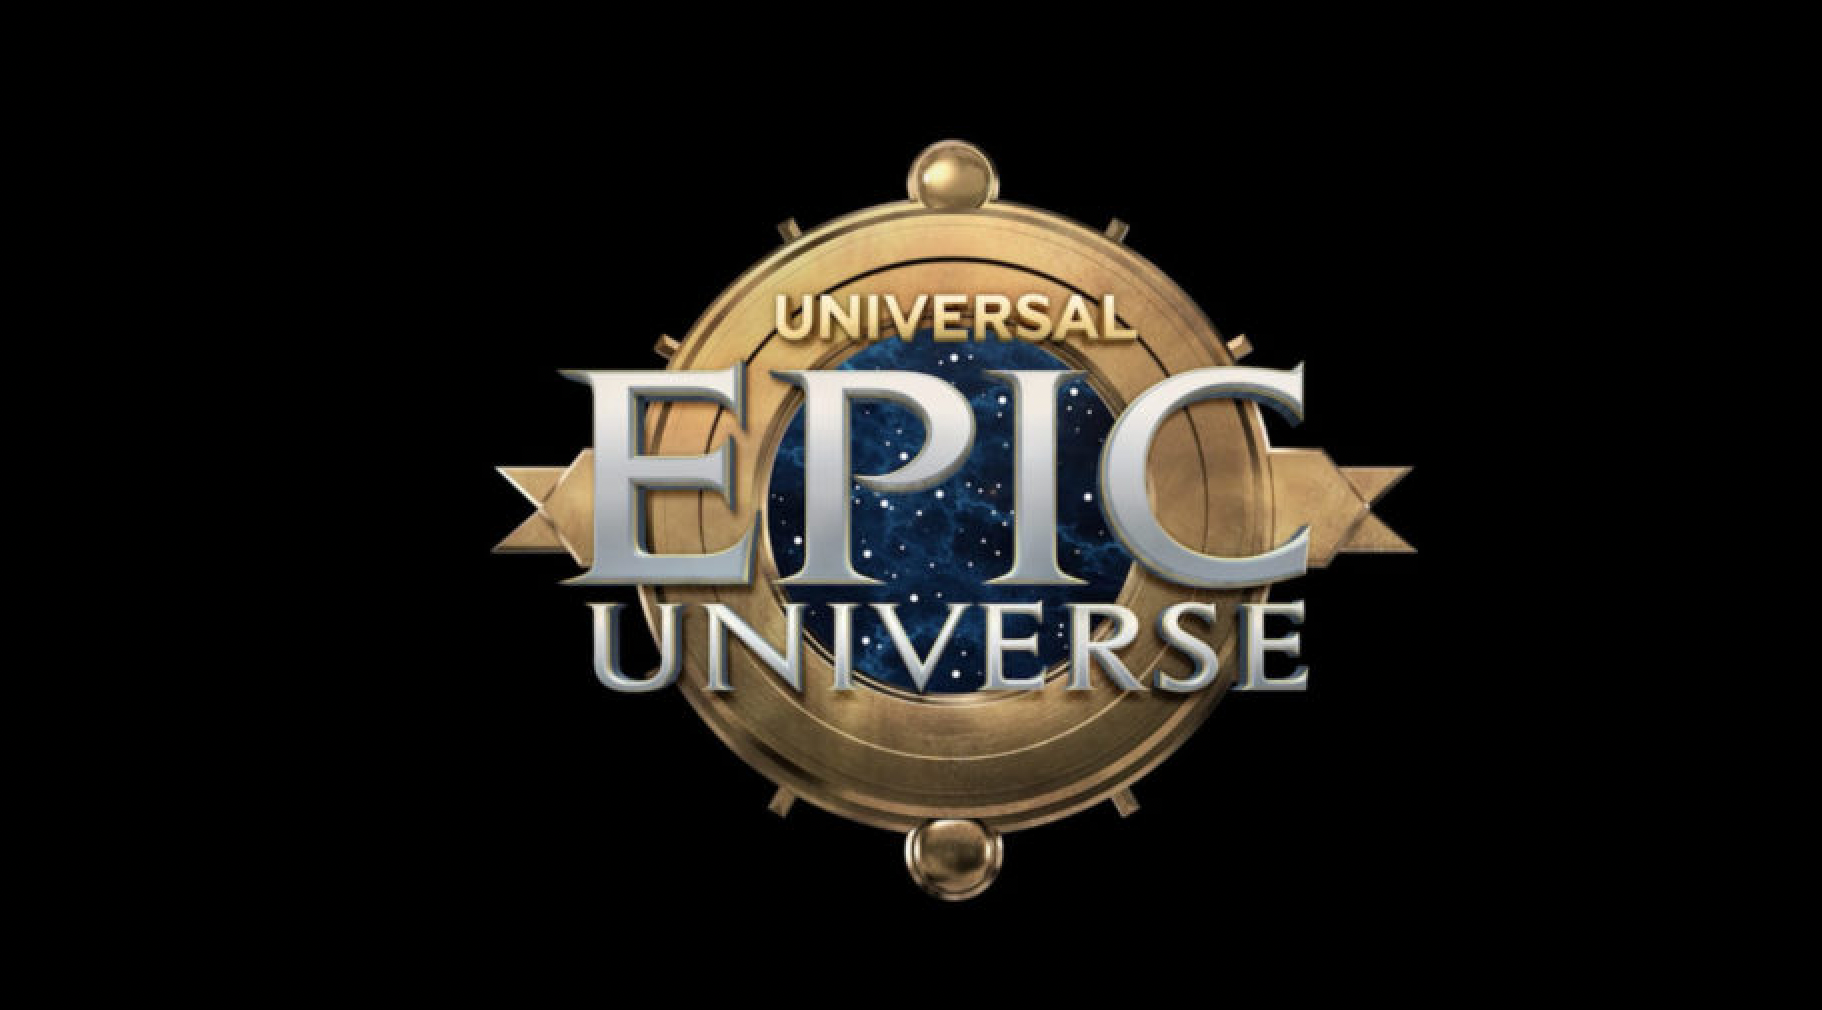 Universal Epic Universe, Universal 